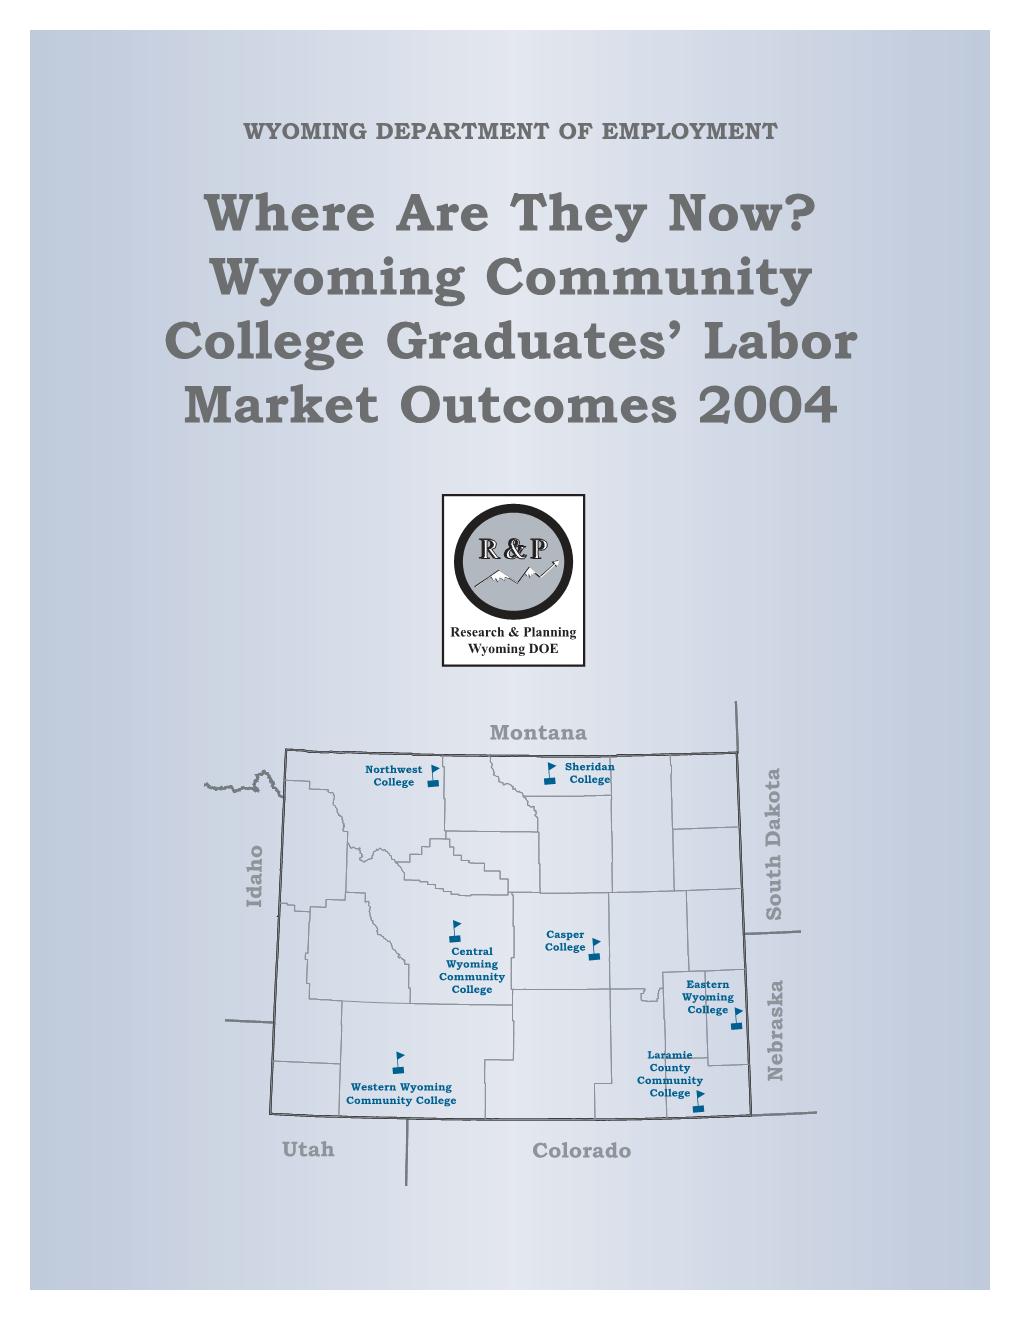 Wyoming Community College Graduates' Labor Market Outcomes 2004